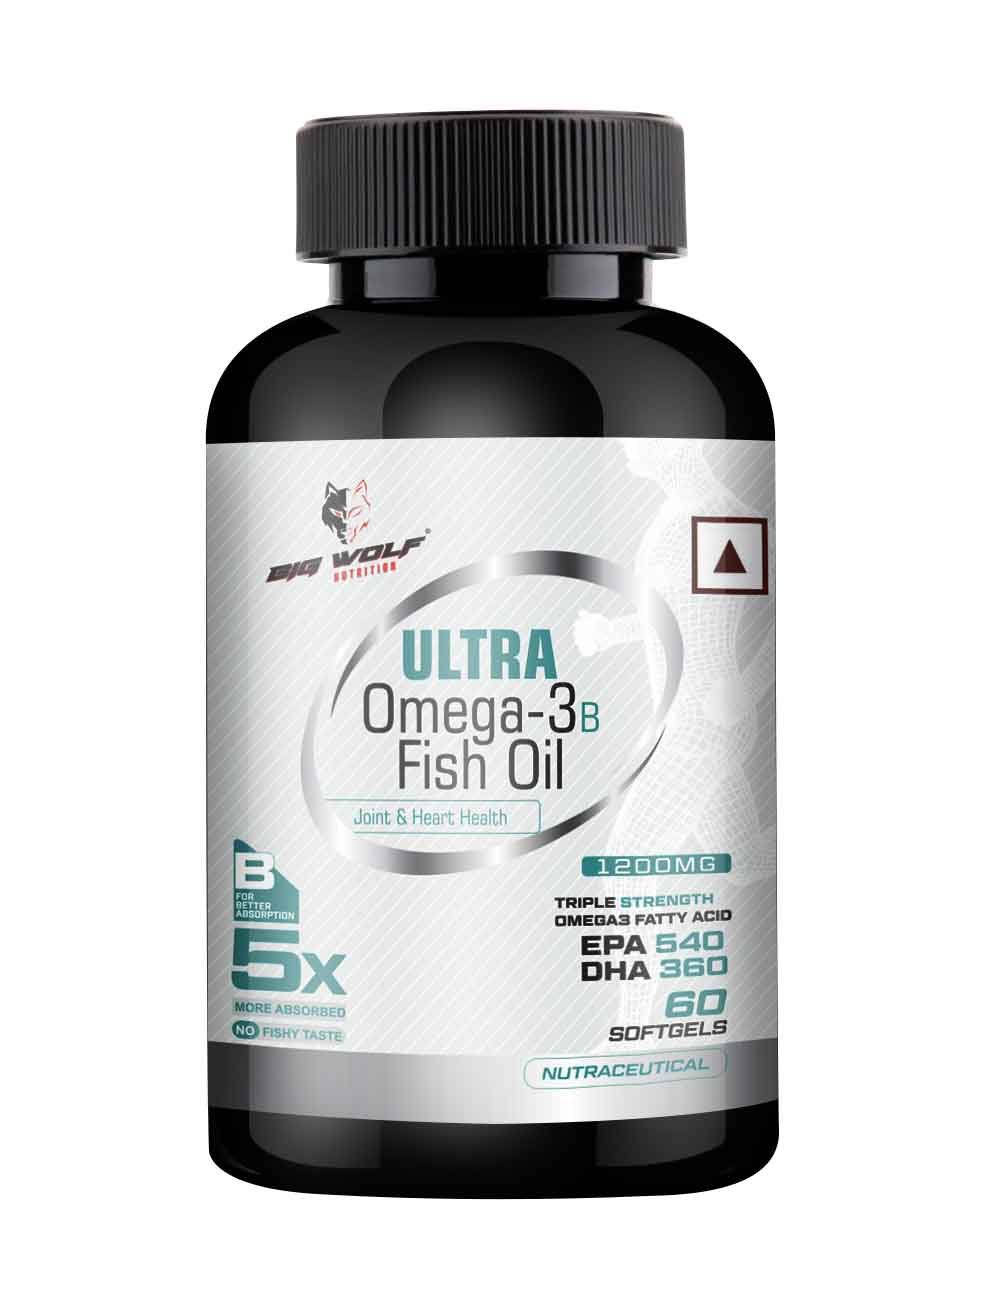 Big Wolf Nutrition fish oil